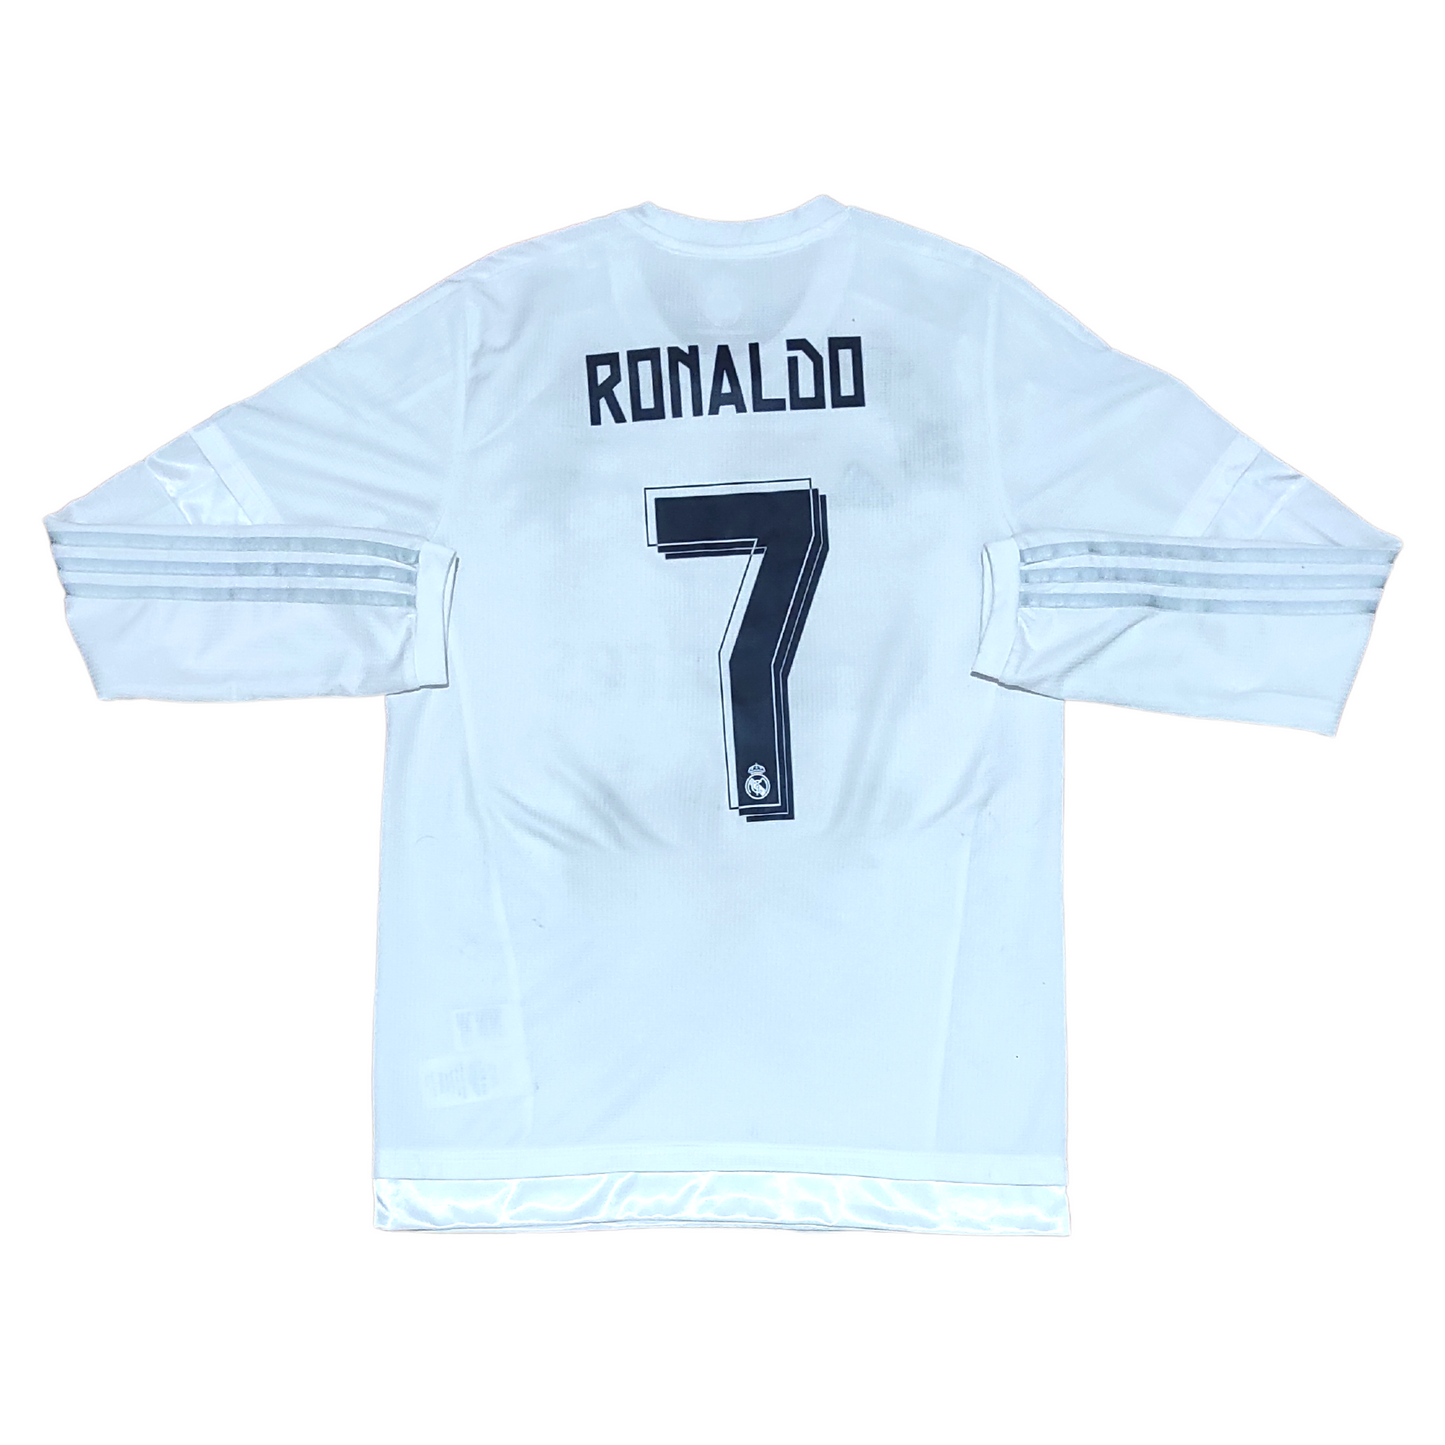 Real Madrid Home L/S Shirt 2015-2016 Ronaldo (M)